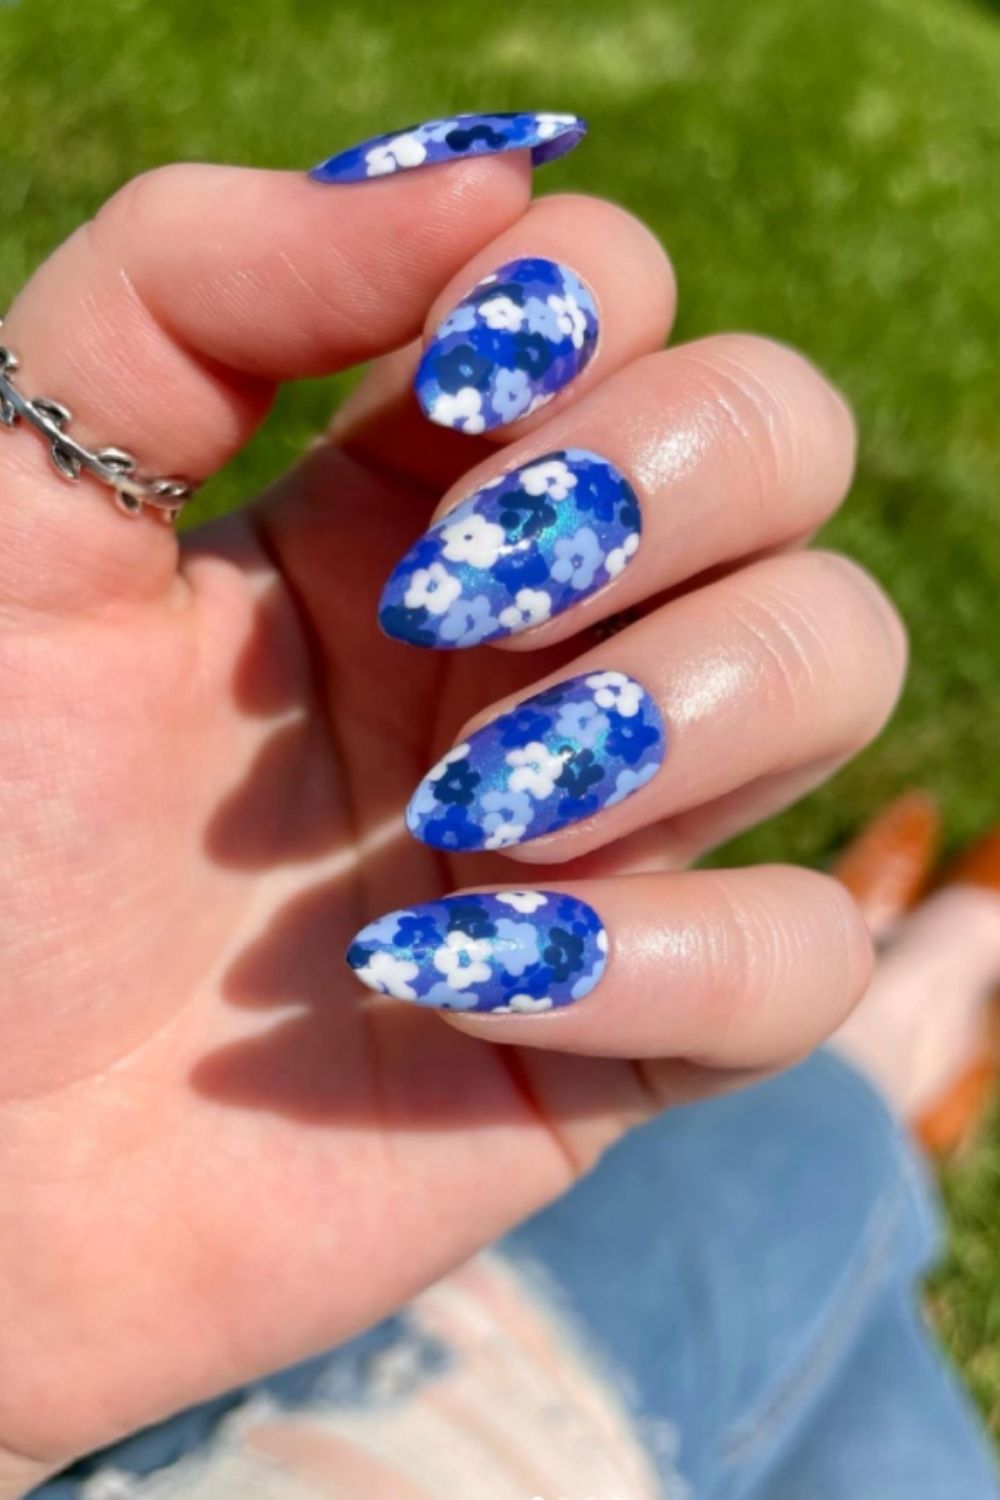 Flower nails designs